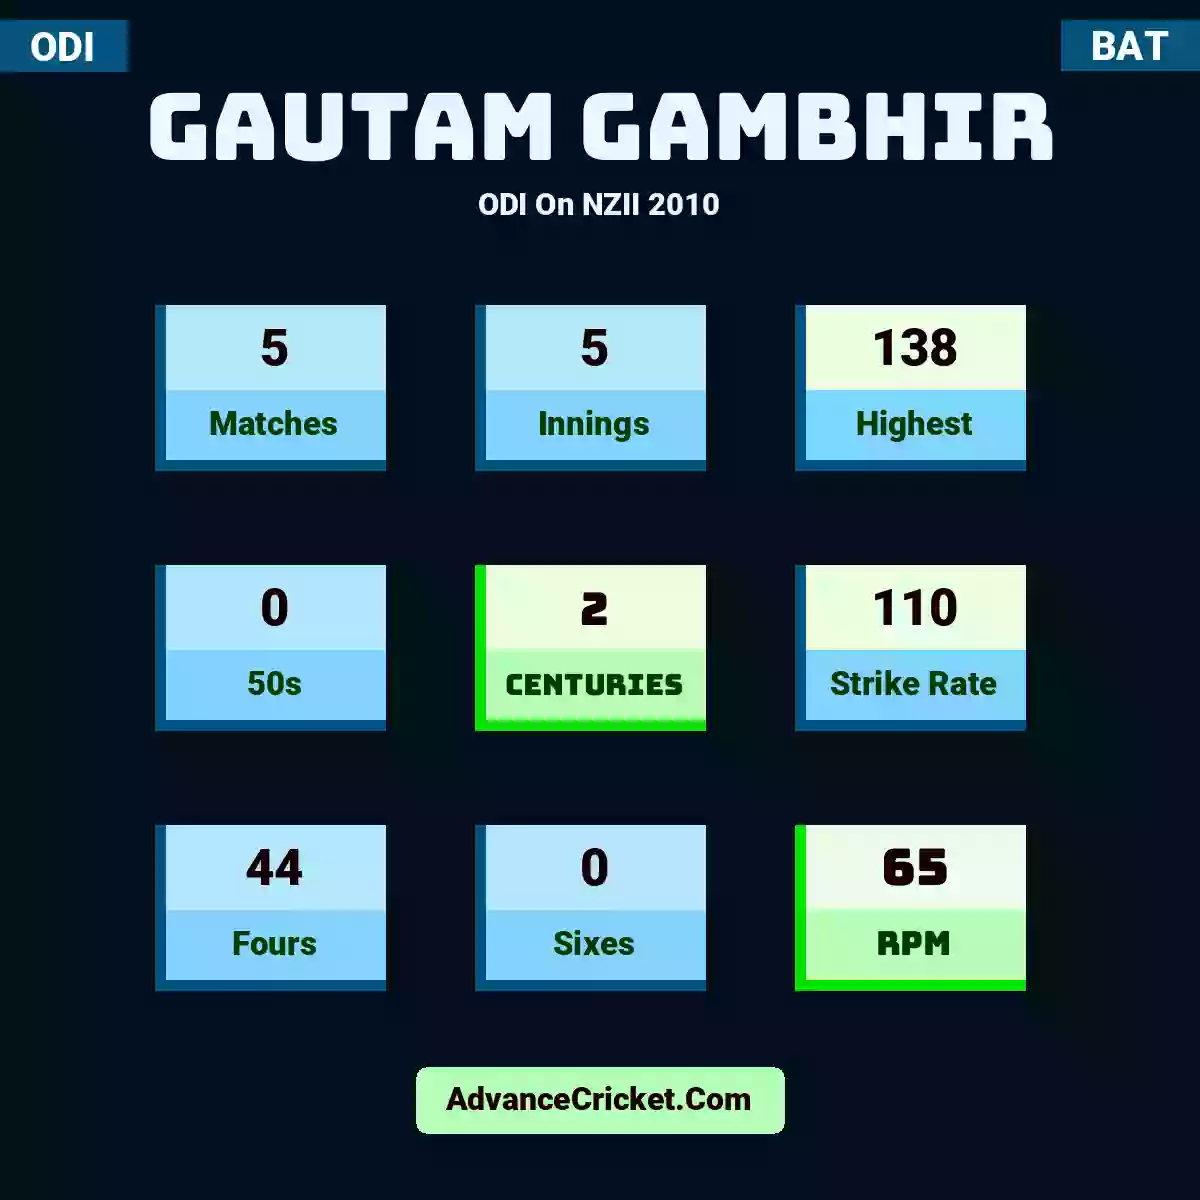 Gautam Gambhir ODI  On NZII 2010, Gautam Gambhir played 5 matches, scored 138 runs as highest, 0 half-centuries, and 2 centuries, with a strike rate of 110. G.Gambhir hit 44 fours and 0 sixes, with an RPM of 65.